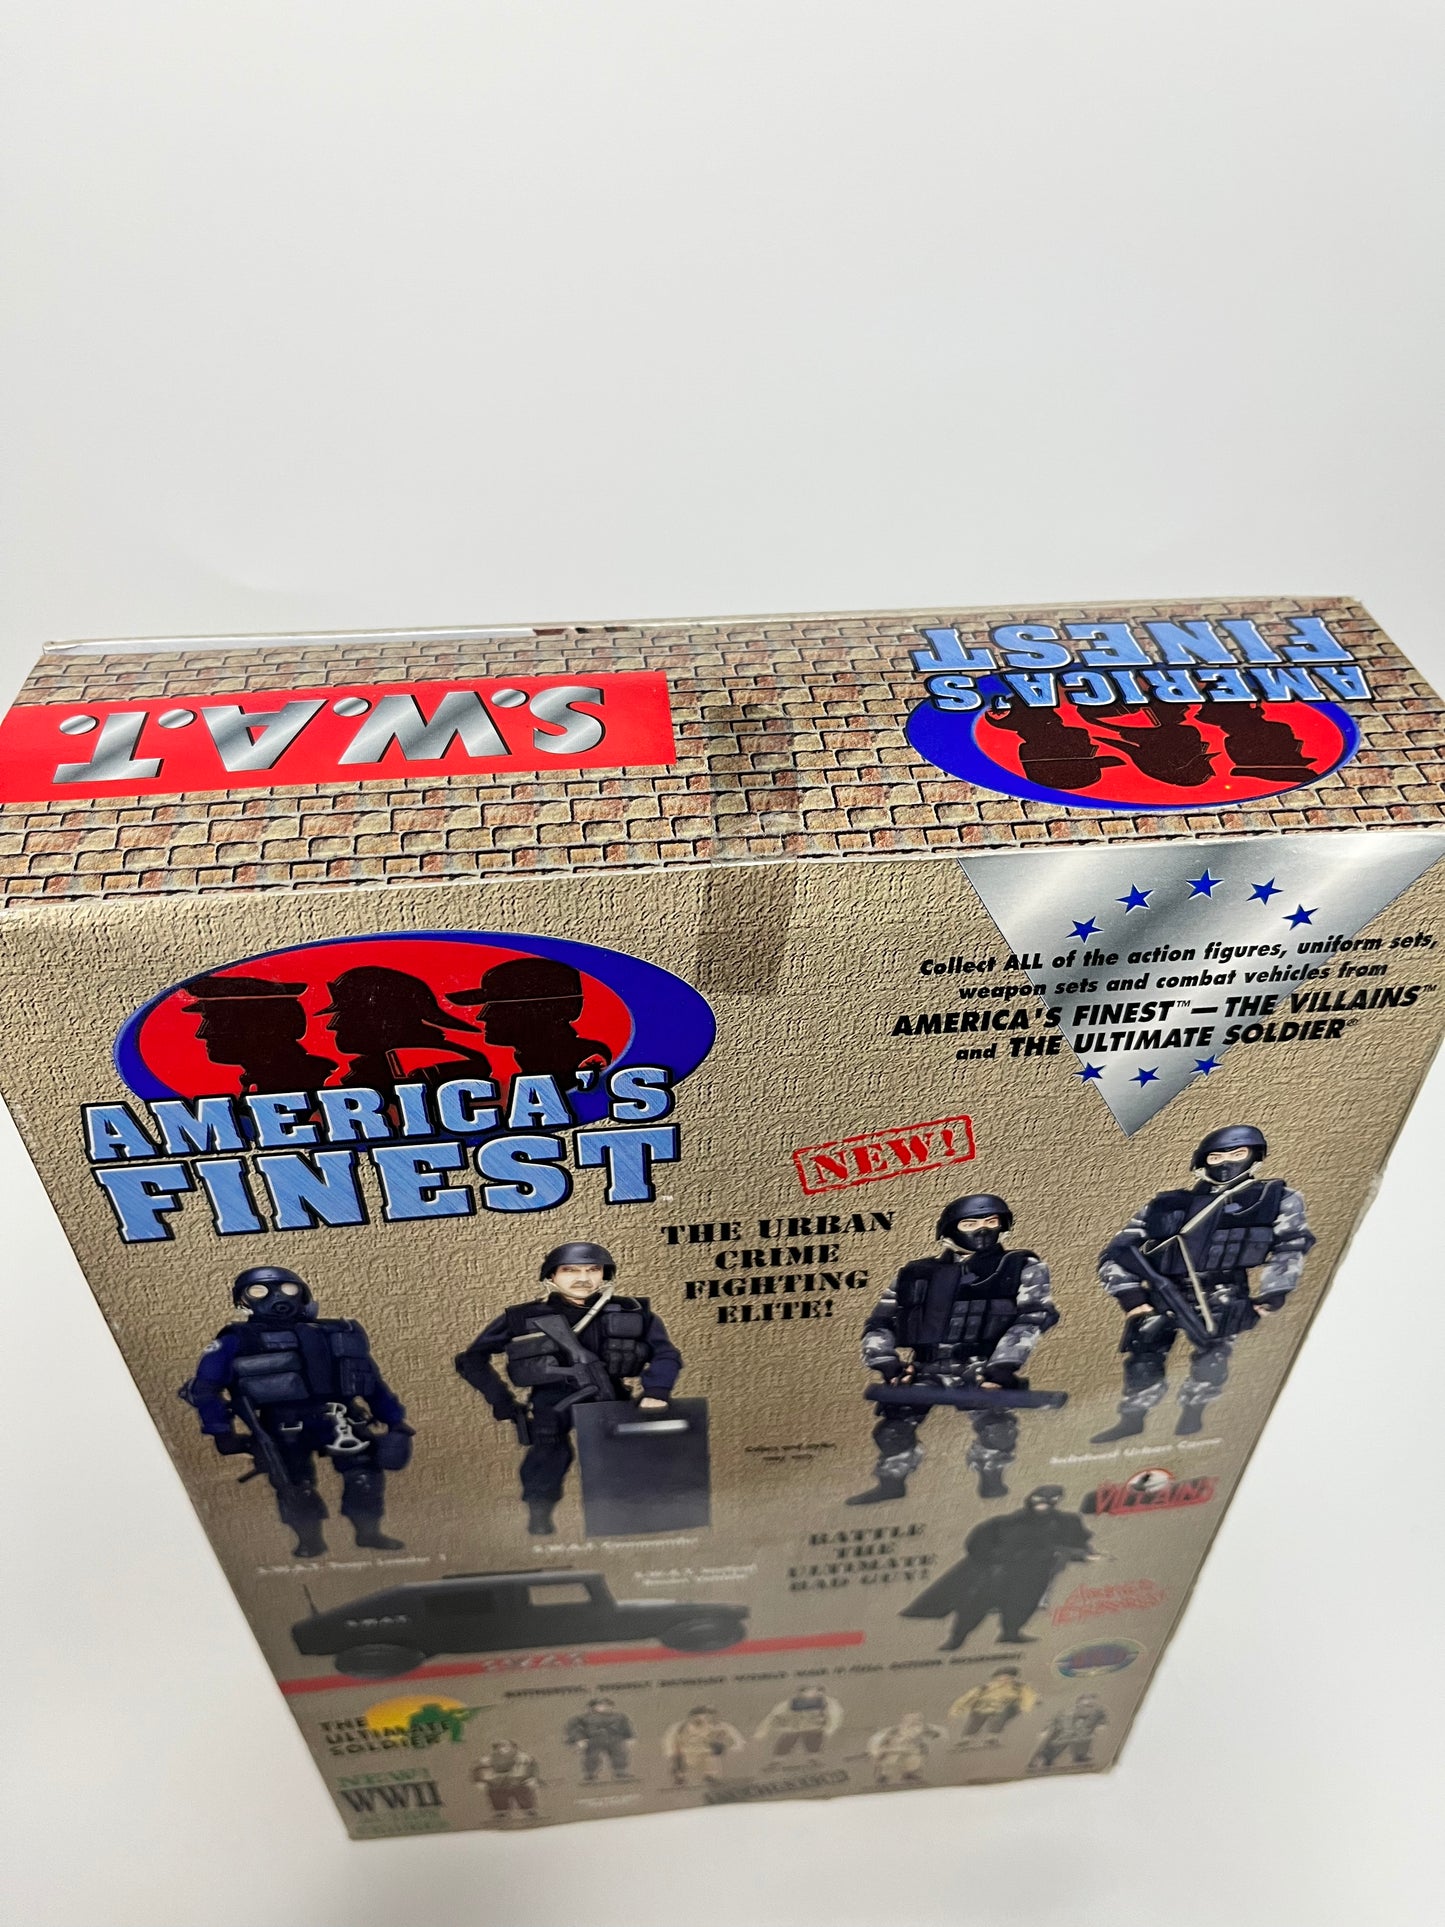 Americas Finest SWAT Commander 12” Action Figure 1999 21st Century Toys